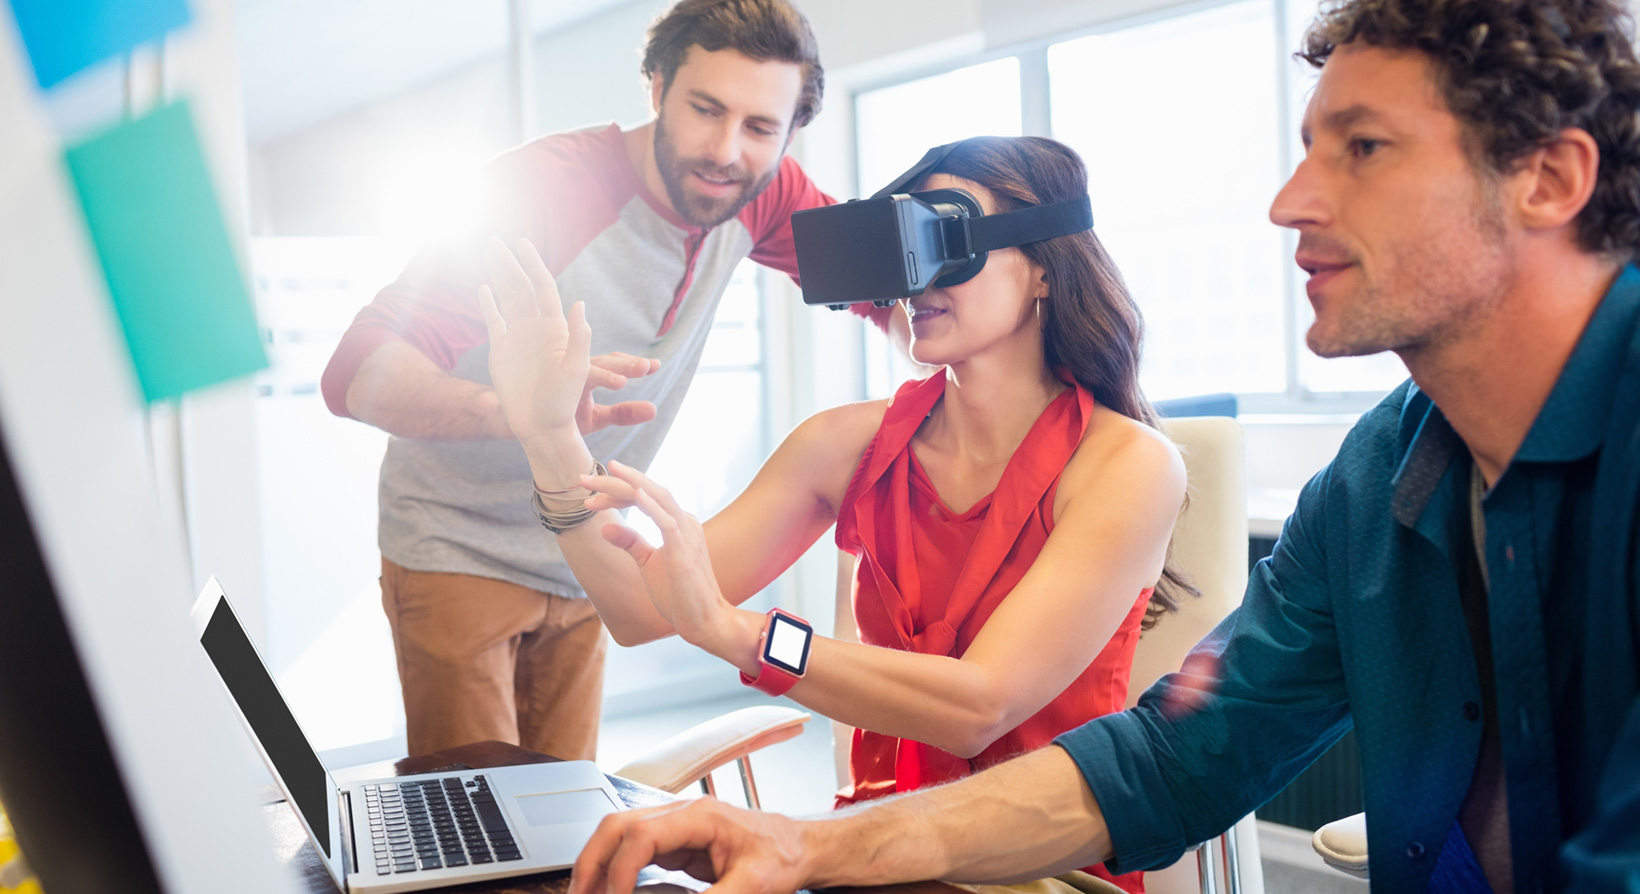 VR for Real Estate Marketing